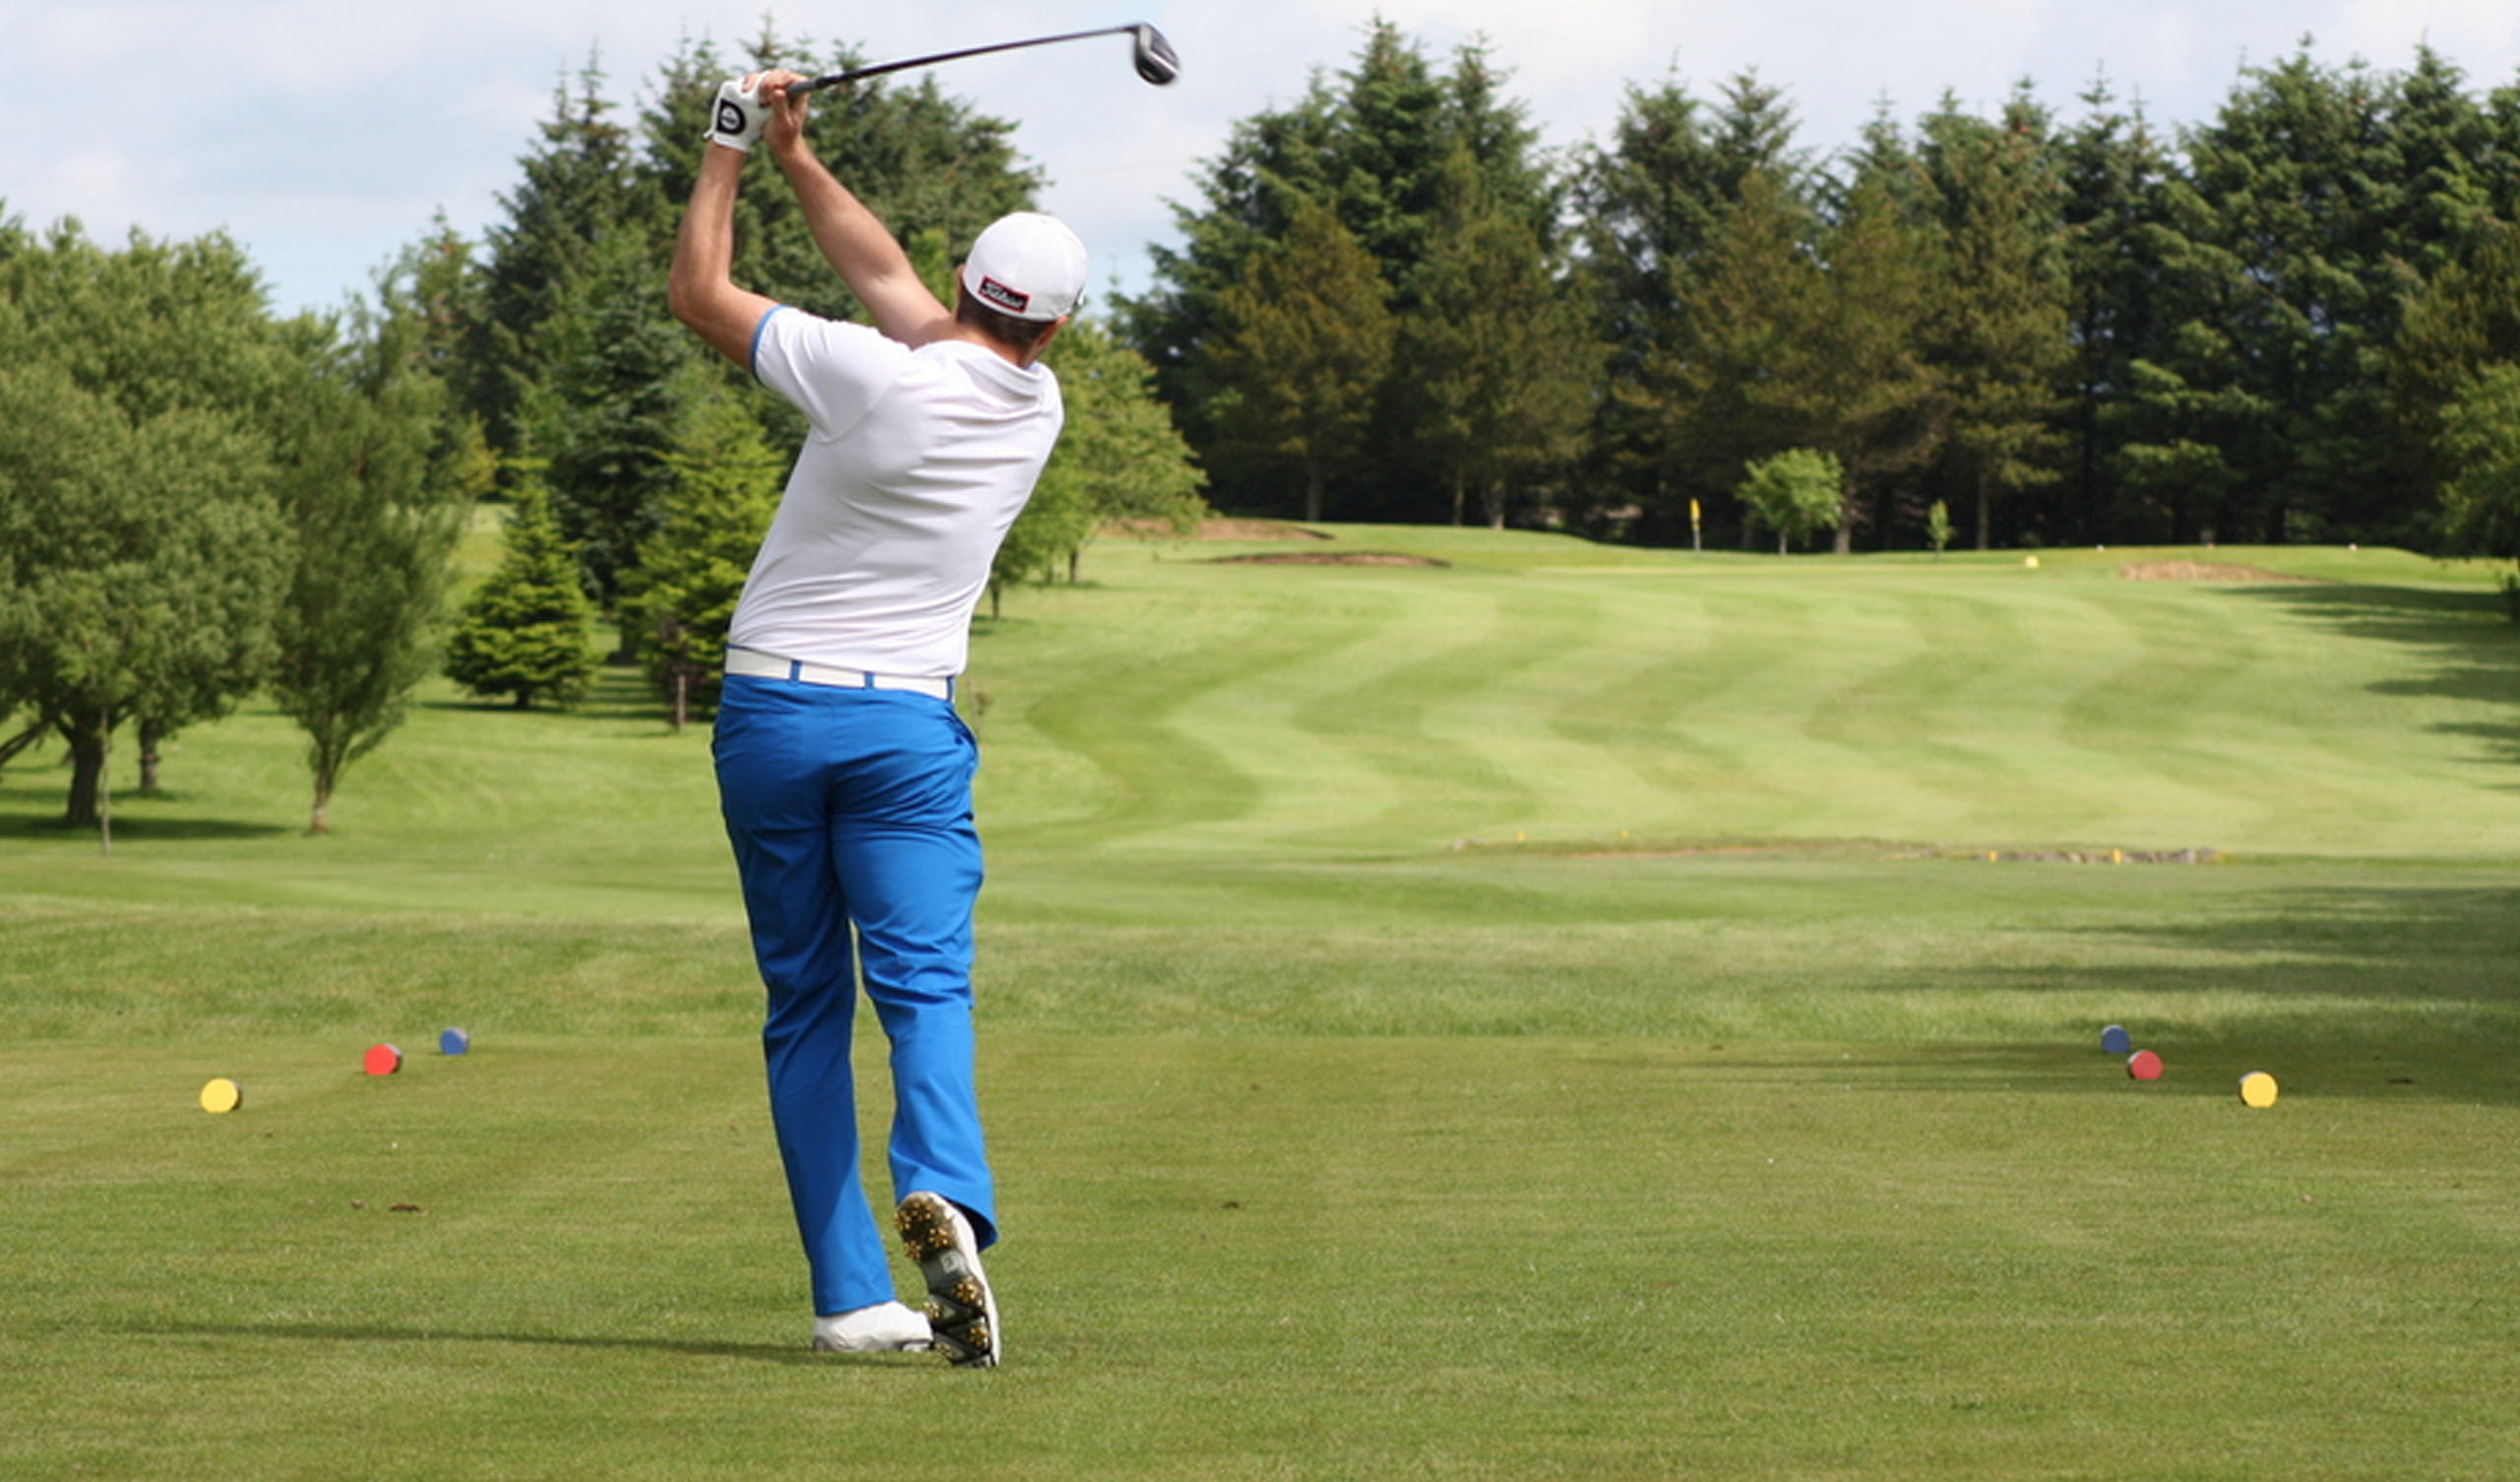 Photograph courtesy of McDonald Golf Club, Golfing in Ellon Aberdeenshire - visit https://www.ellongolfclub.co.uk